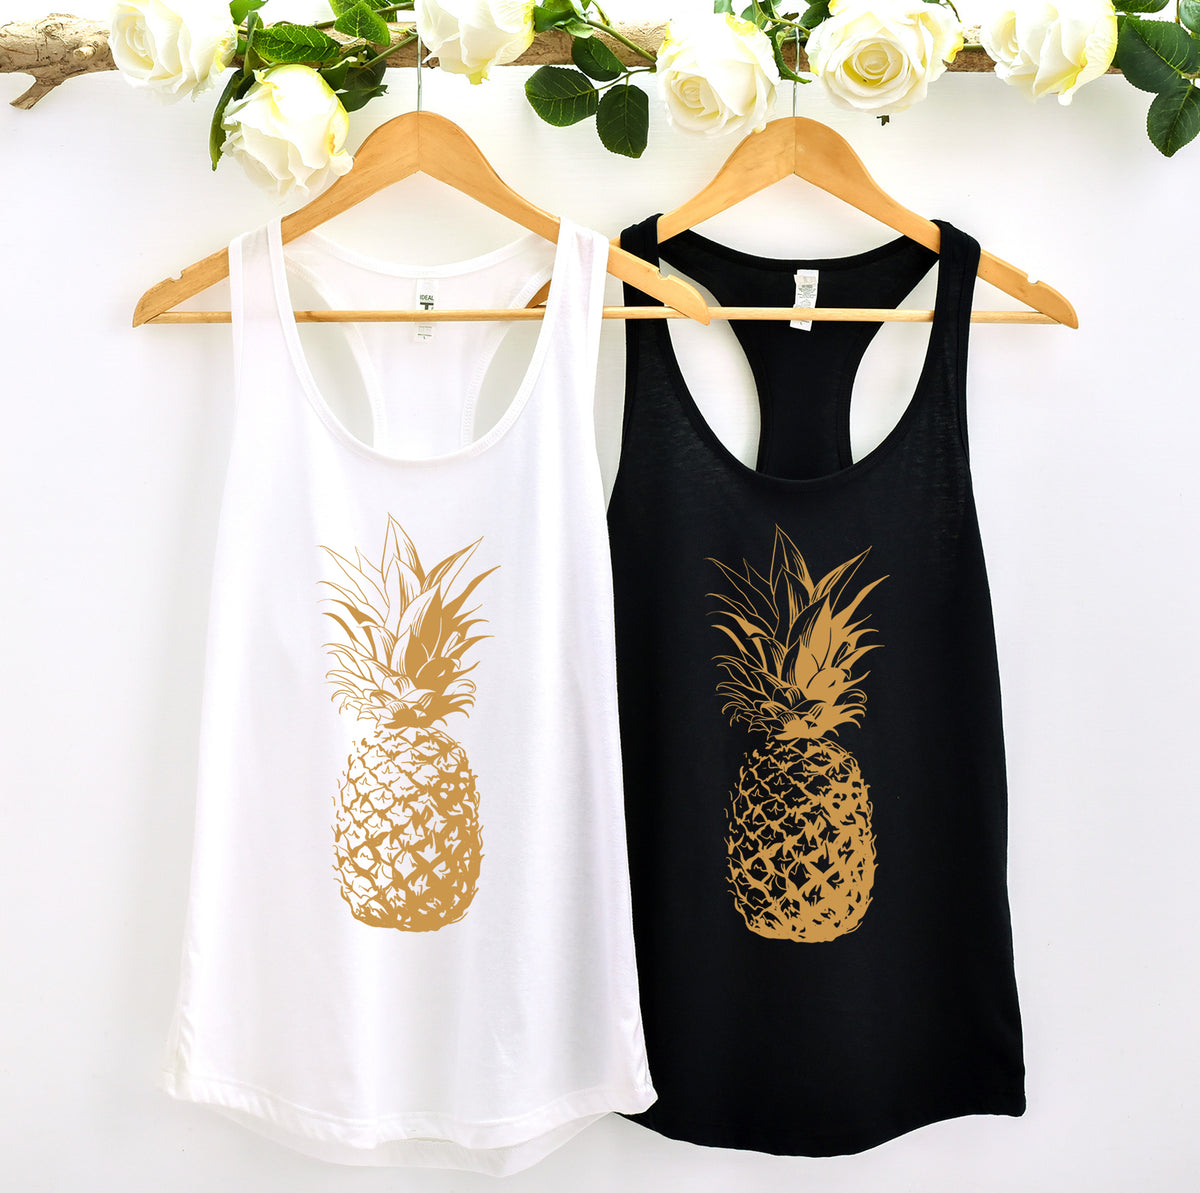 Gold Pineapple Beach Bum Aesthetic Shirt | White and Black Racerback Tank Tops